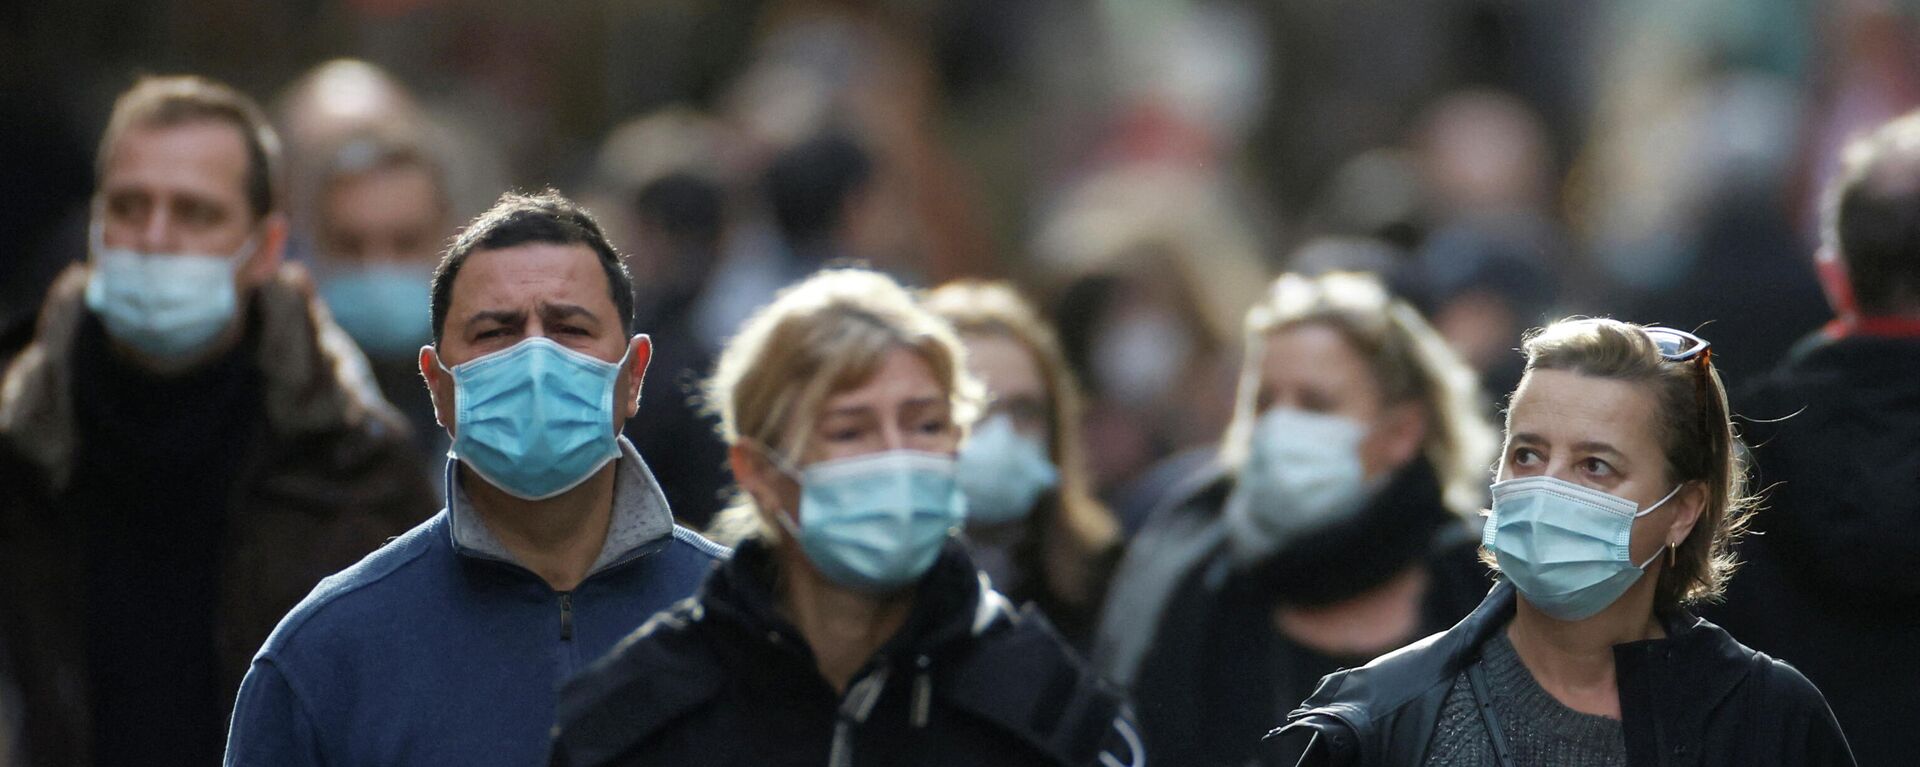 People, wearing protective face masks, walk on the Mouffetard street, amid the spread of the coronavirus disease (COVID-19) pandemic, in Paris, France, December 30, 2021 - Sputnik International, 1920, 04.01.2022